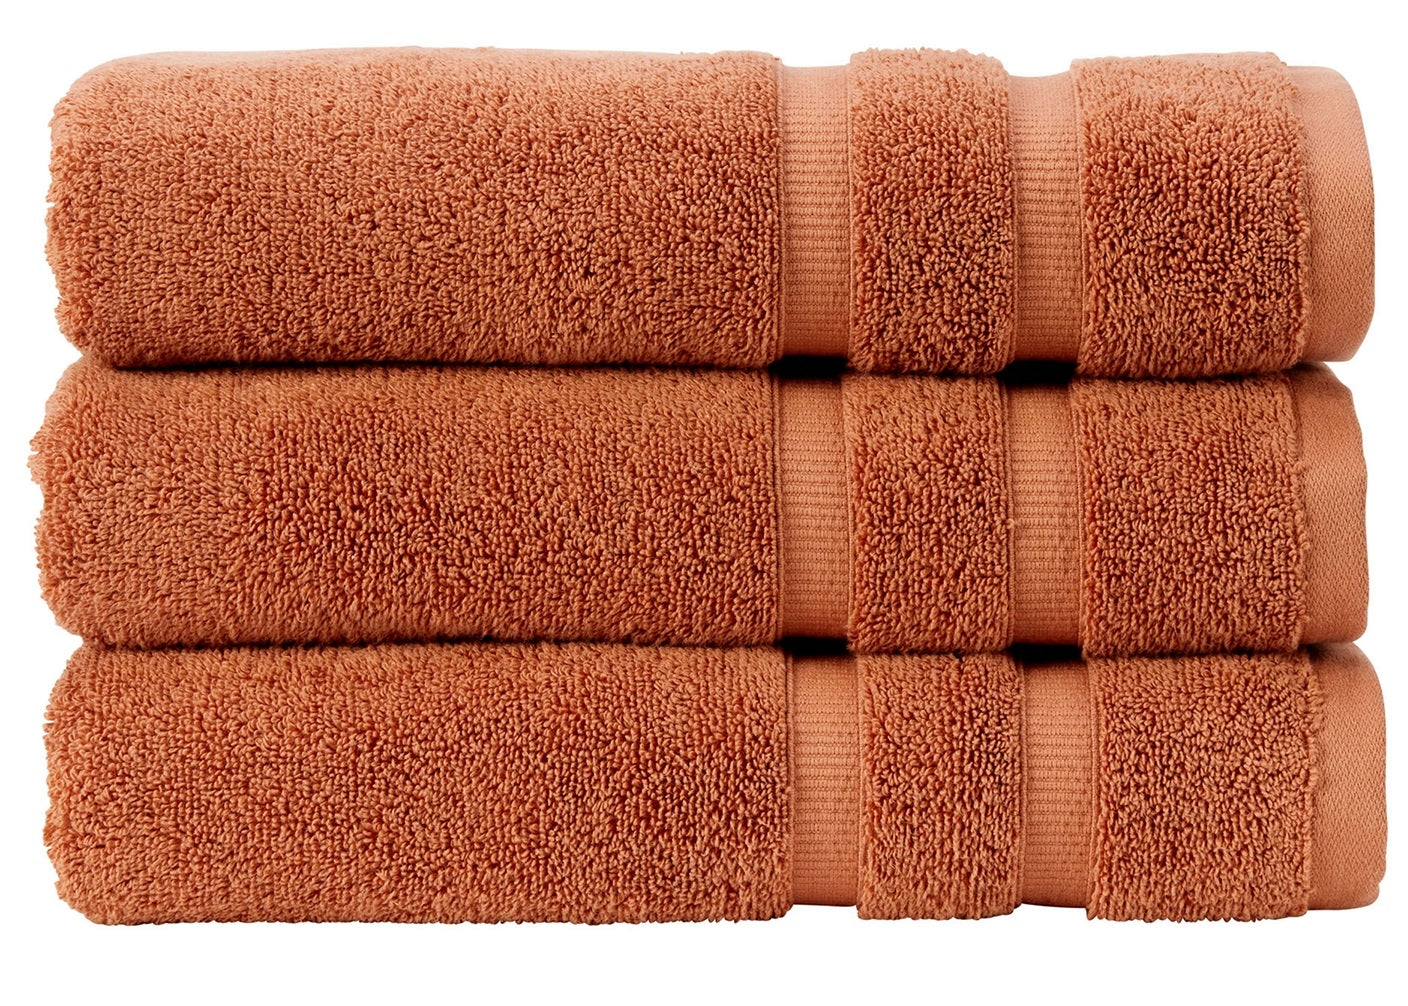 Christy 100% Cotton 675GSM Bath Sheet Towel - Signum Burnt Sienna